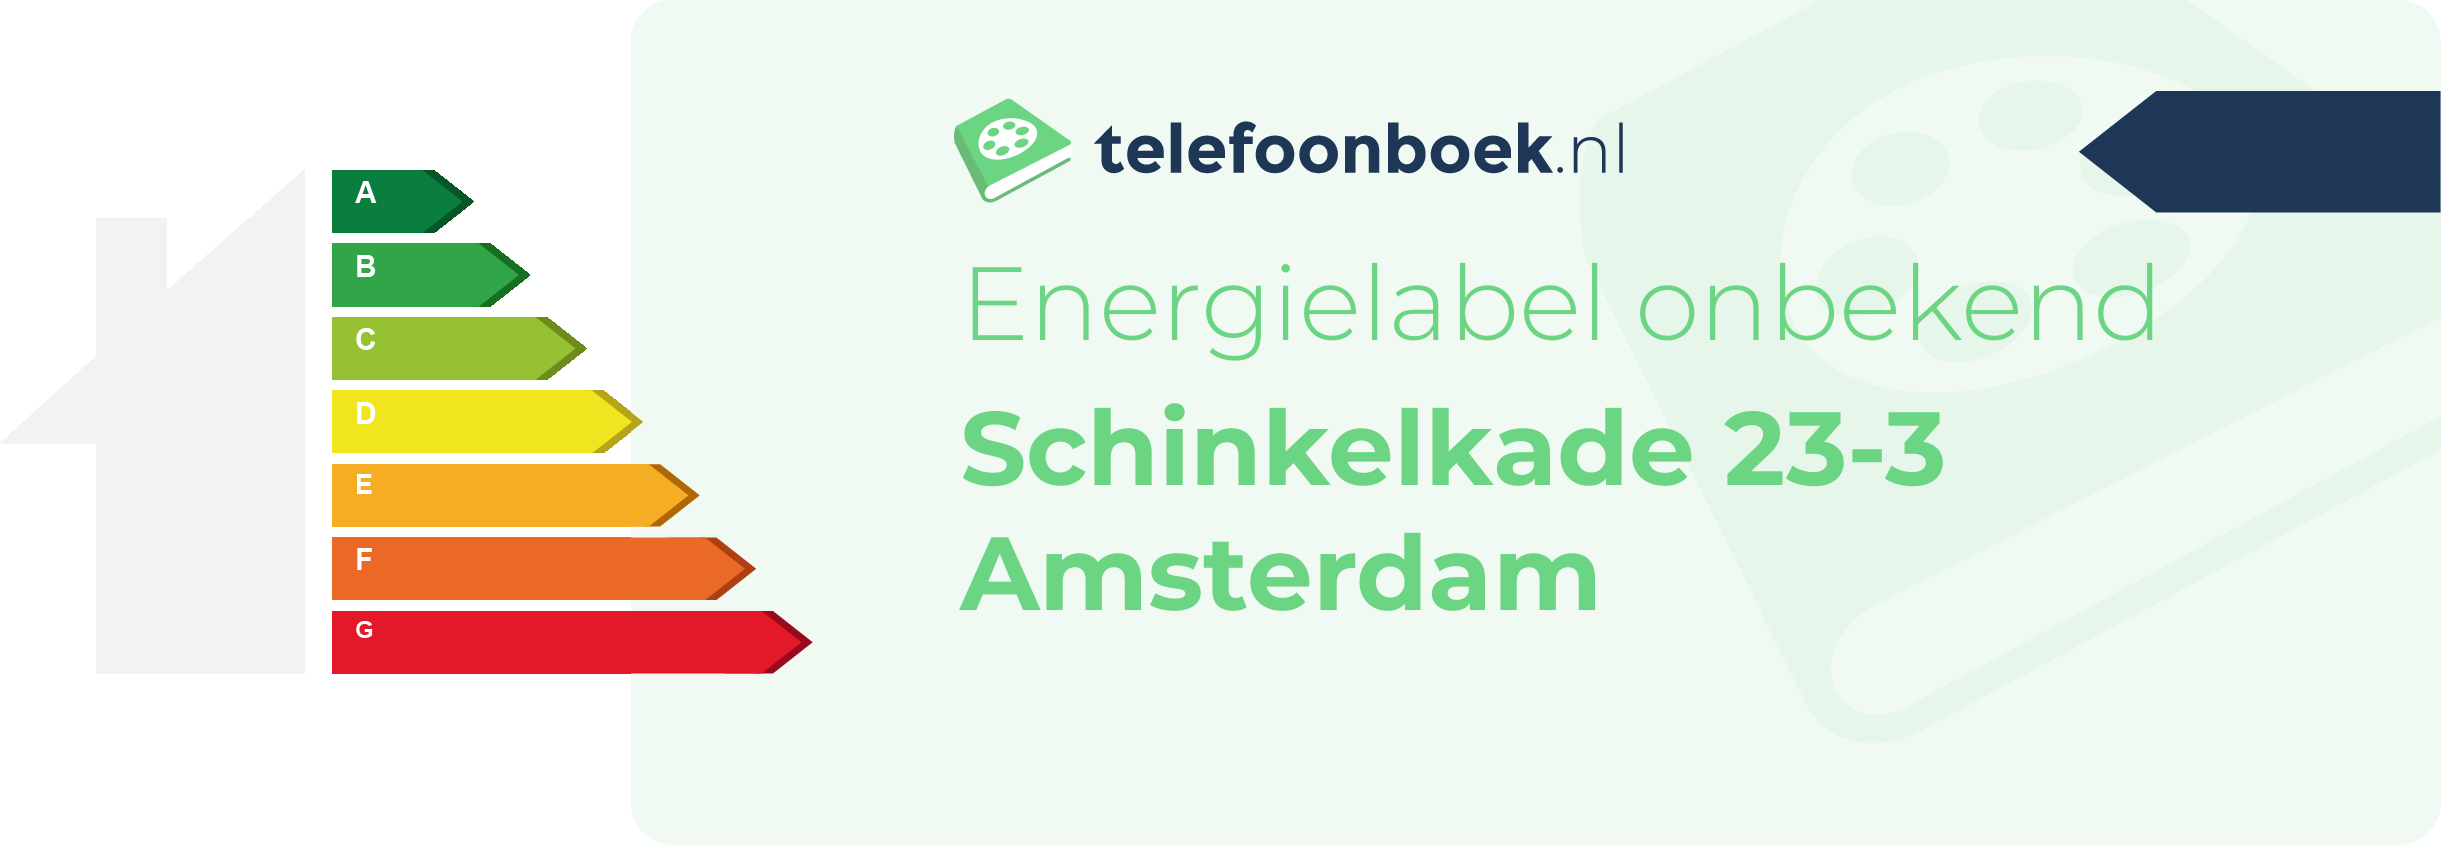 Energielabel Schinkelkade 23-3 Amsterdam